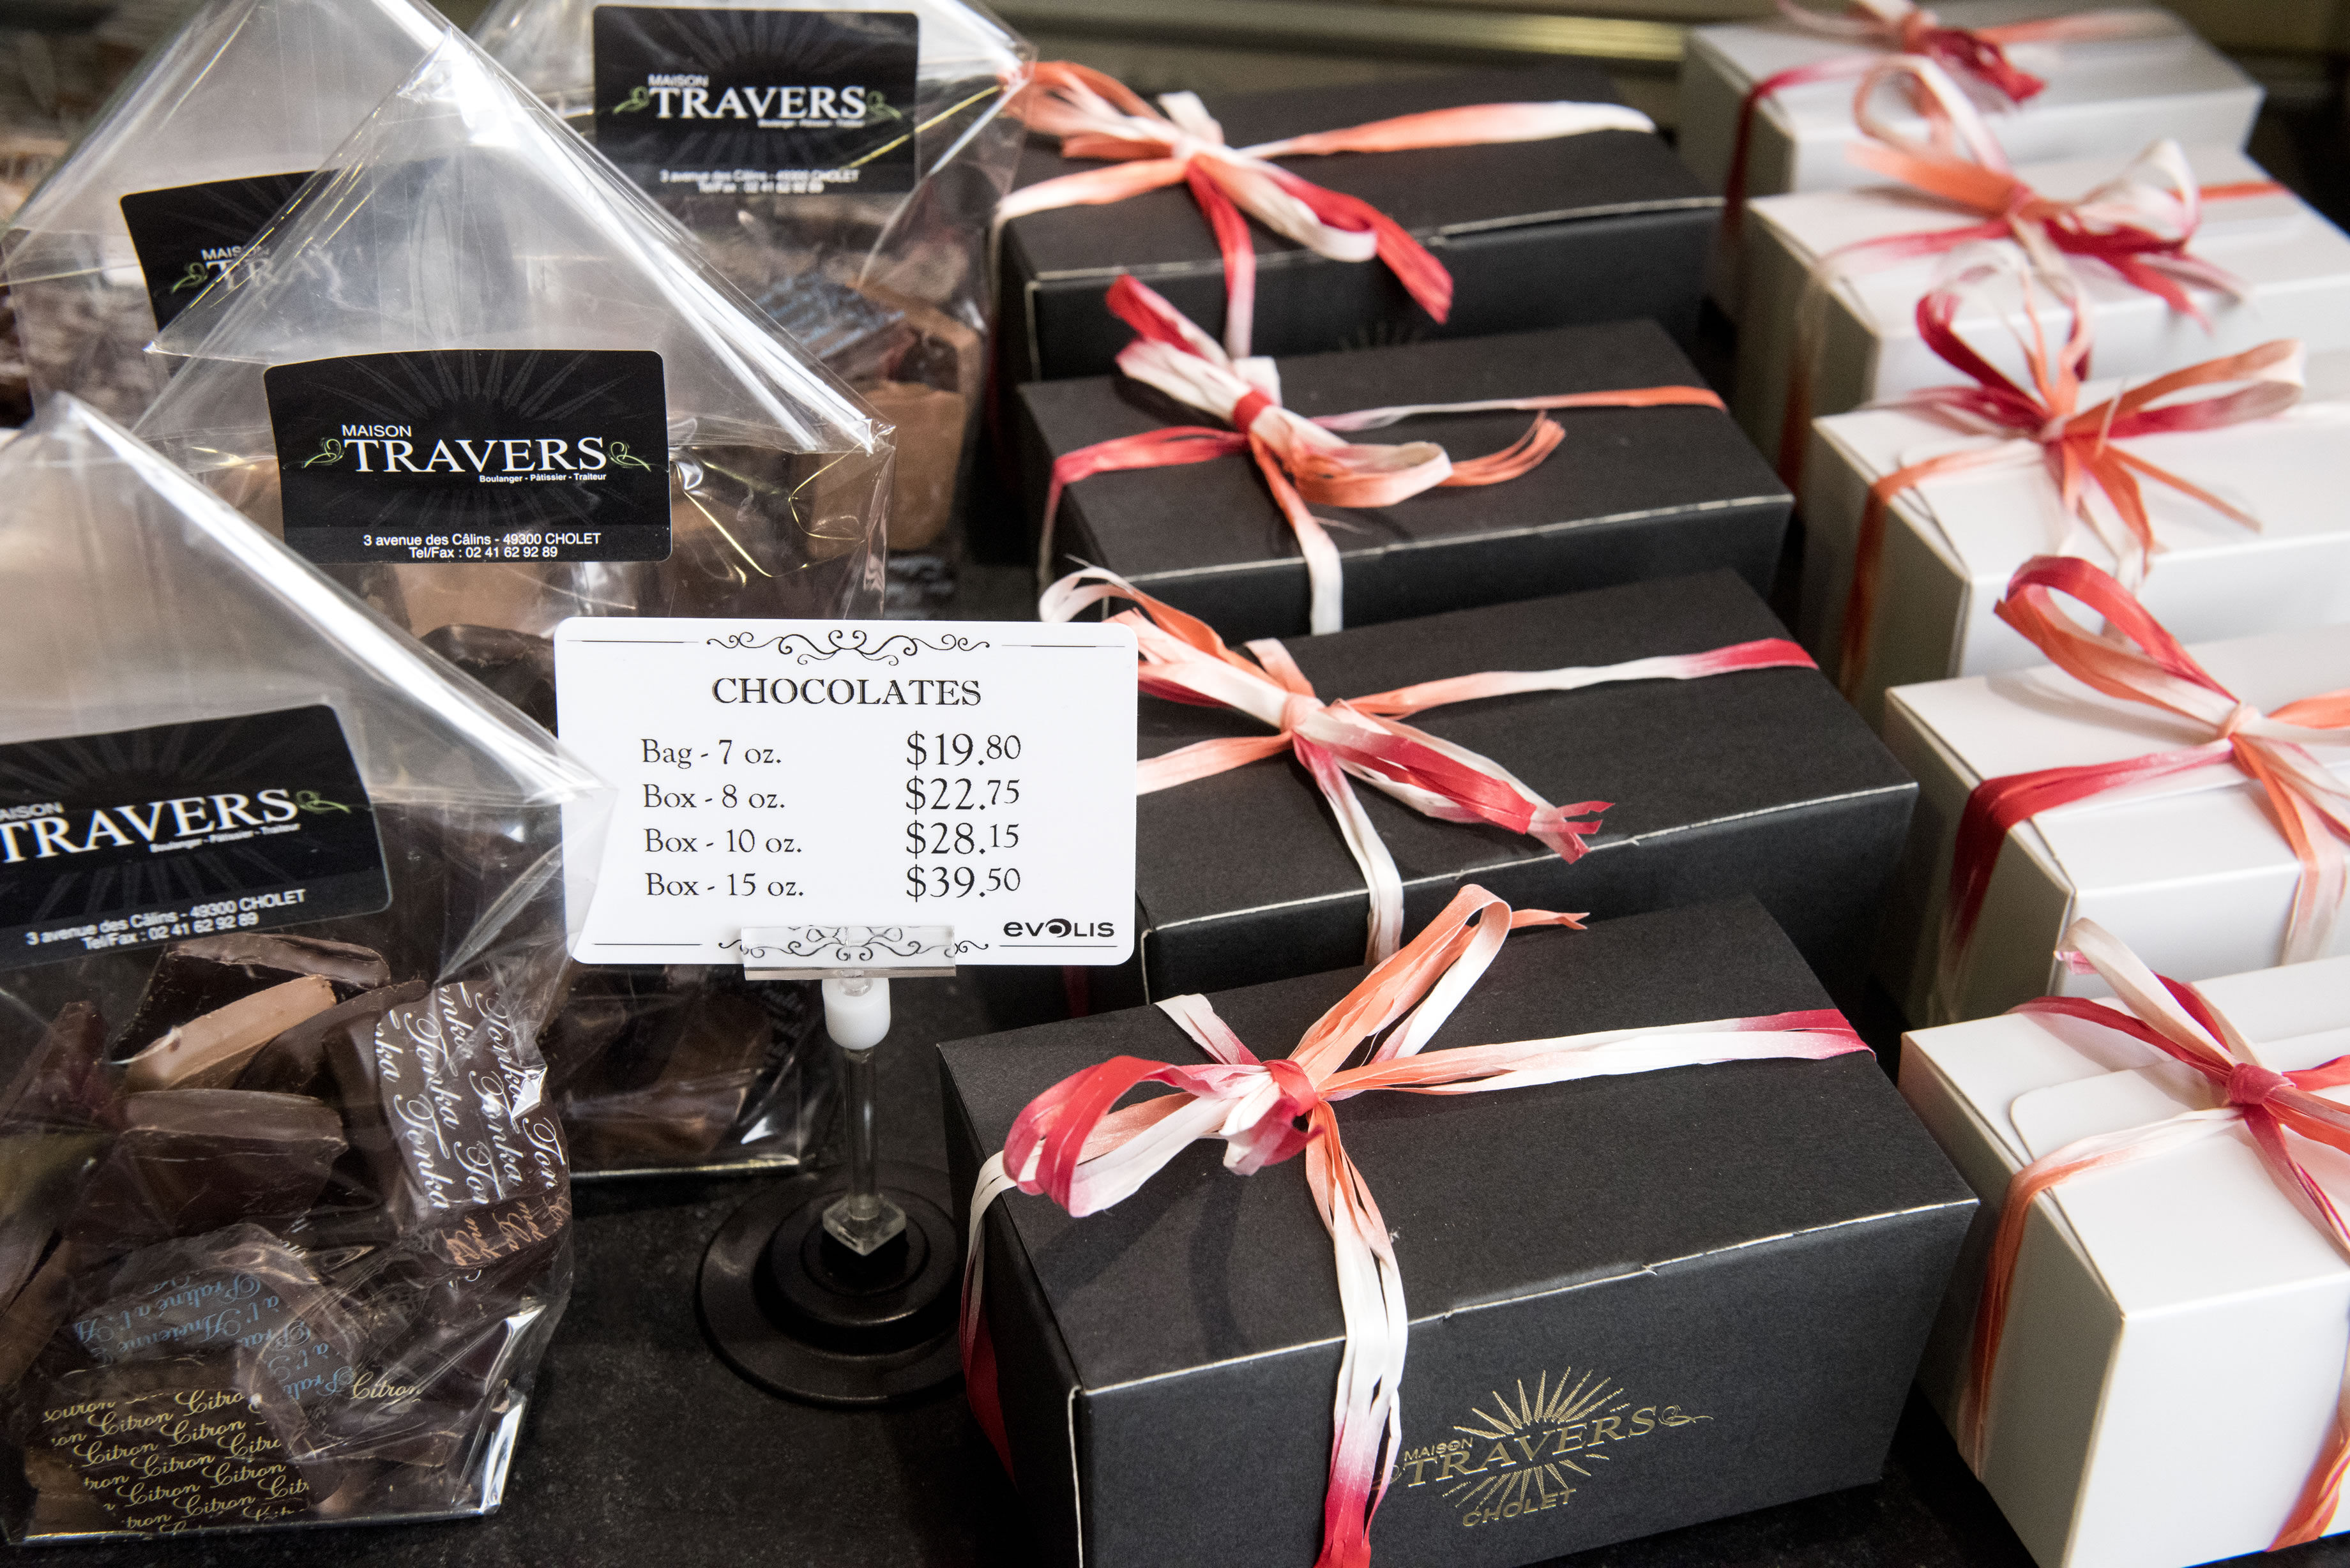 Chocolate display counter price tags created by Edikio printer solutions